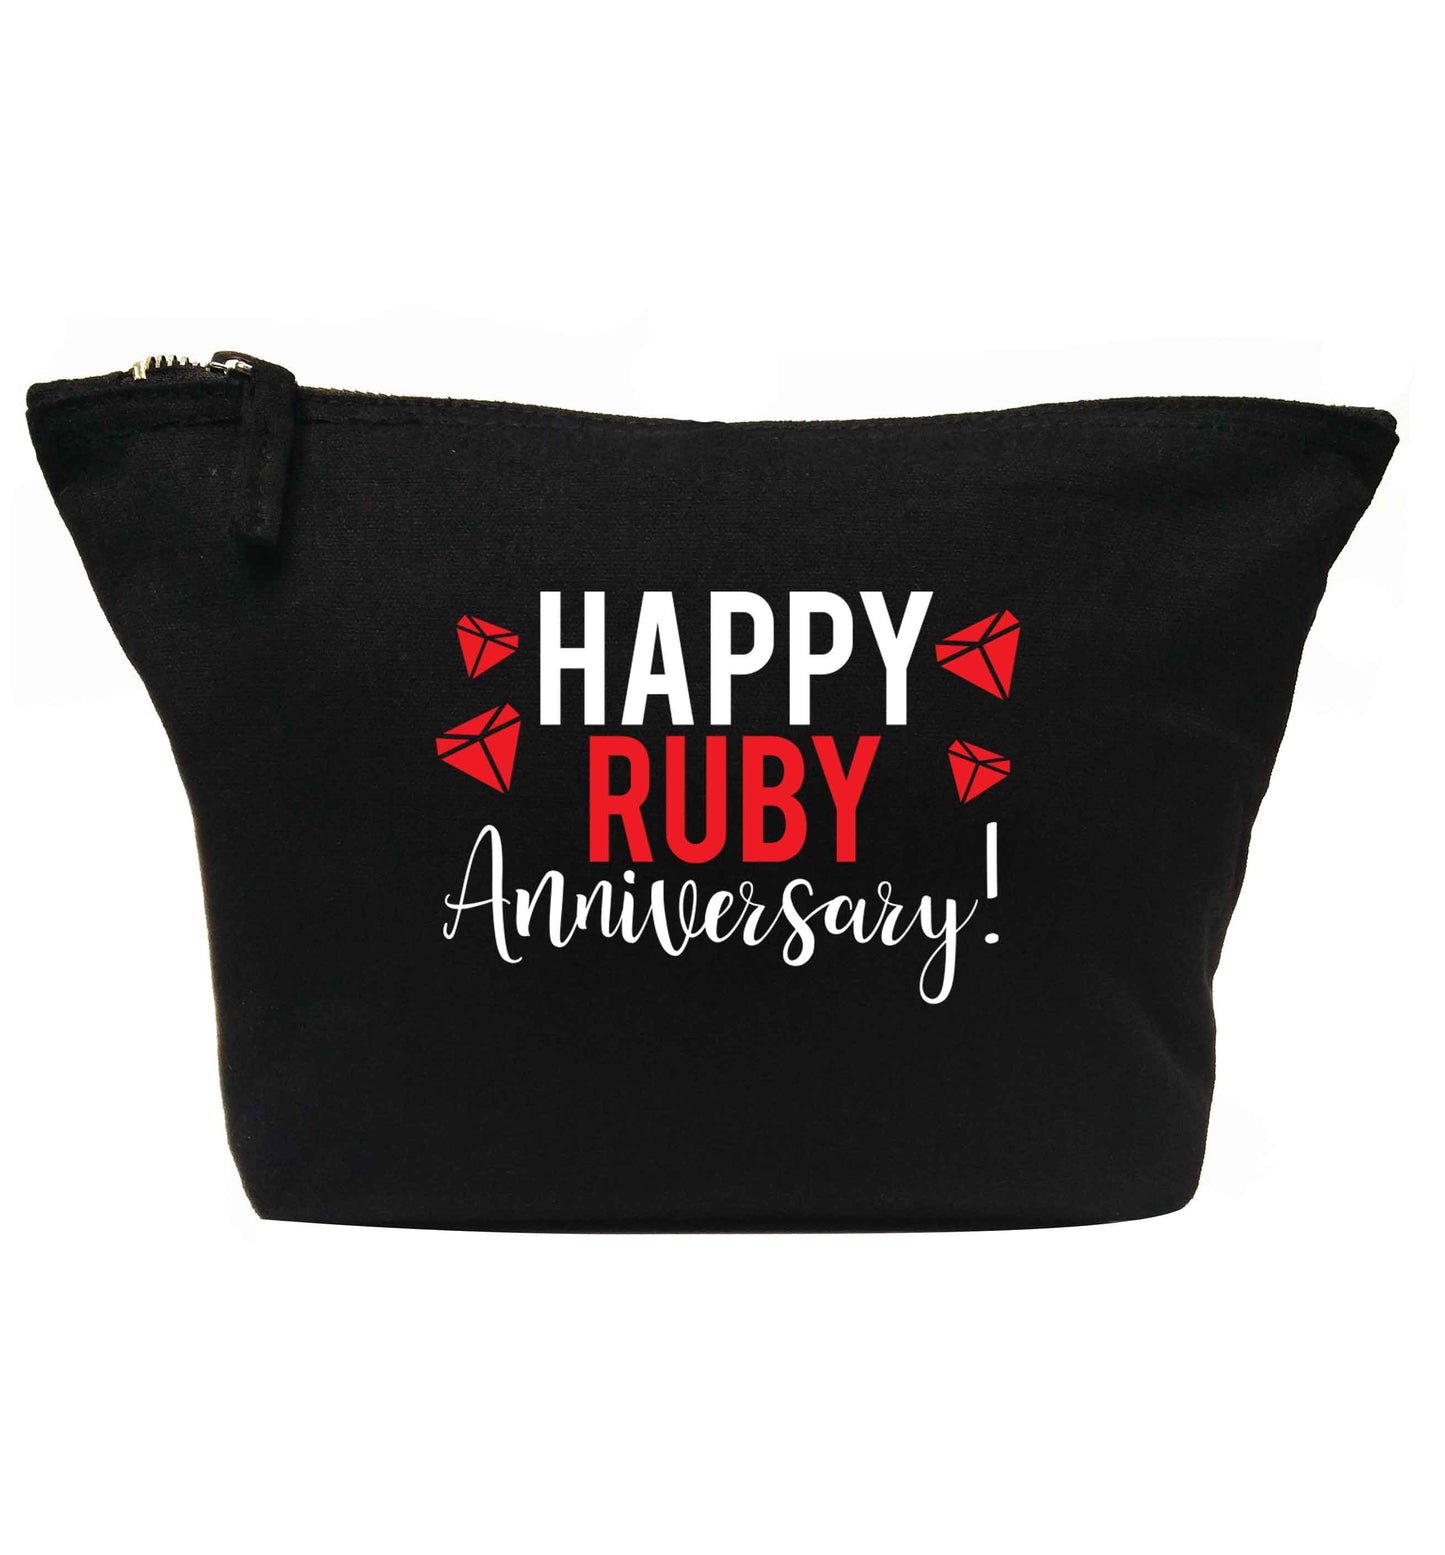 Happy ruby anniversary! | Makeup / wash bag